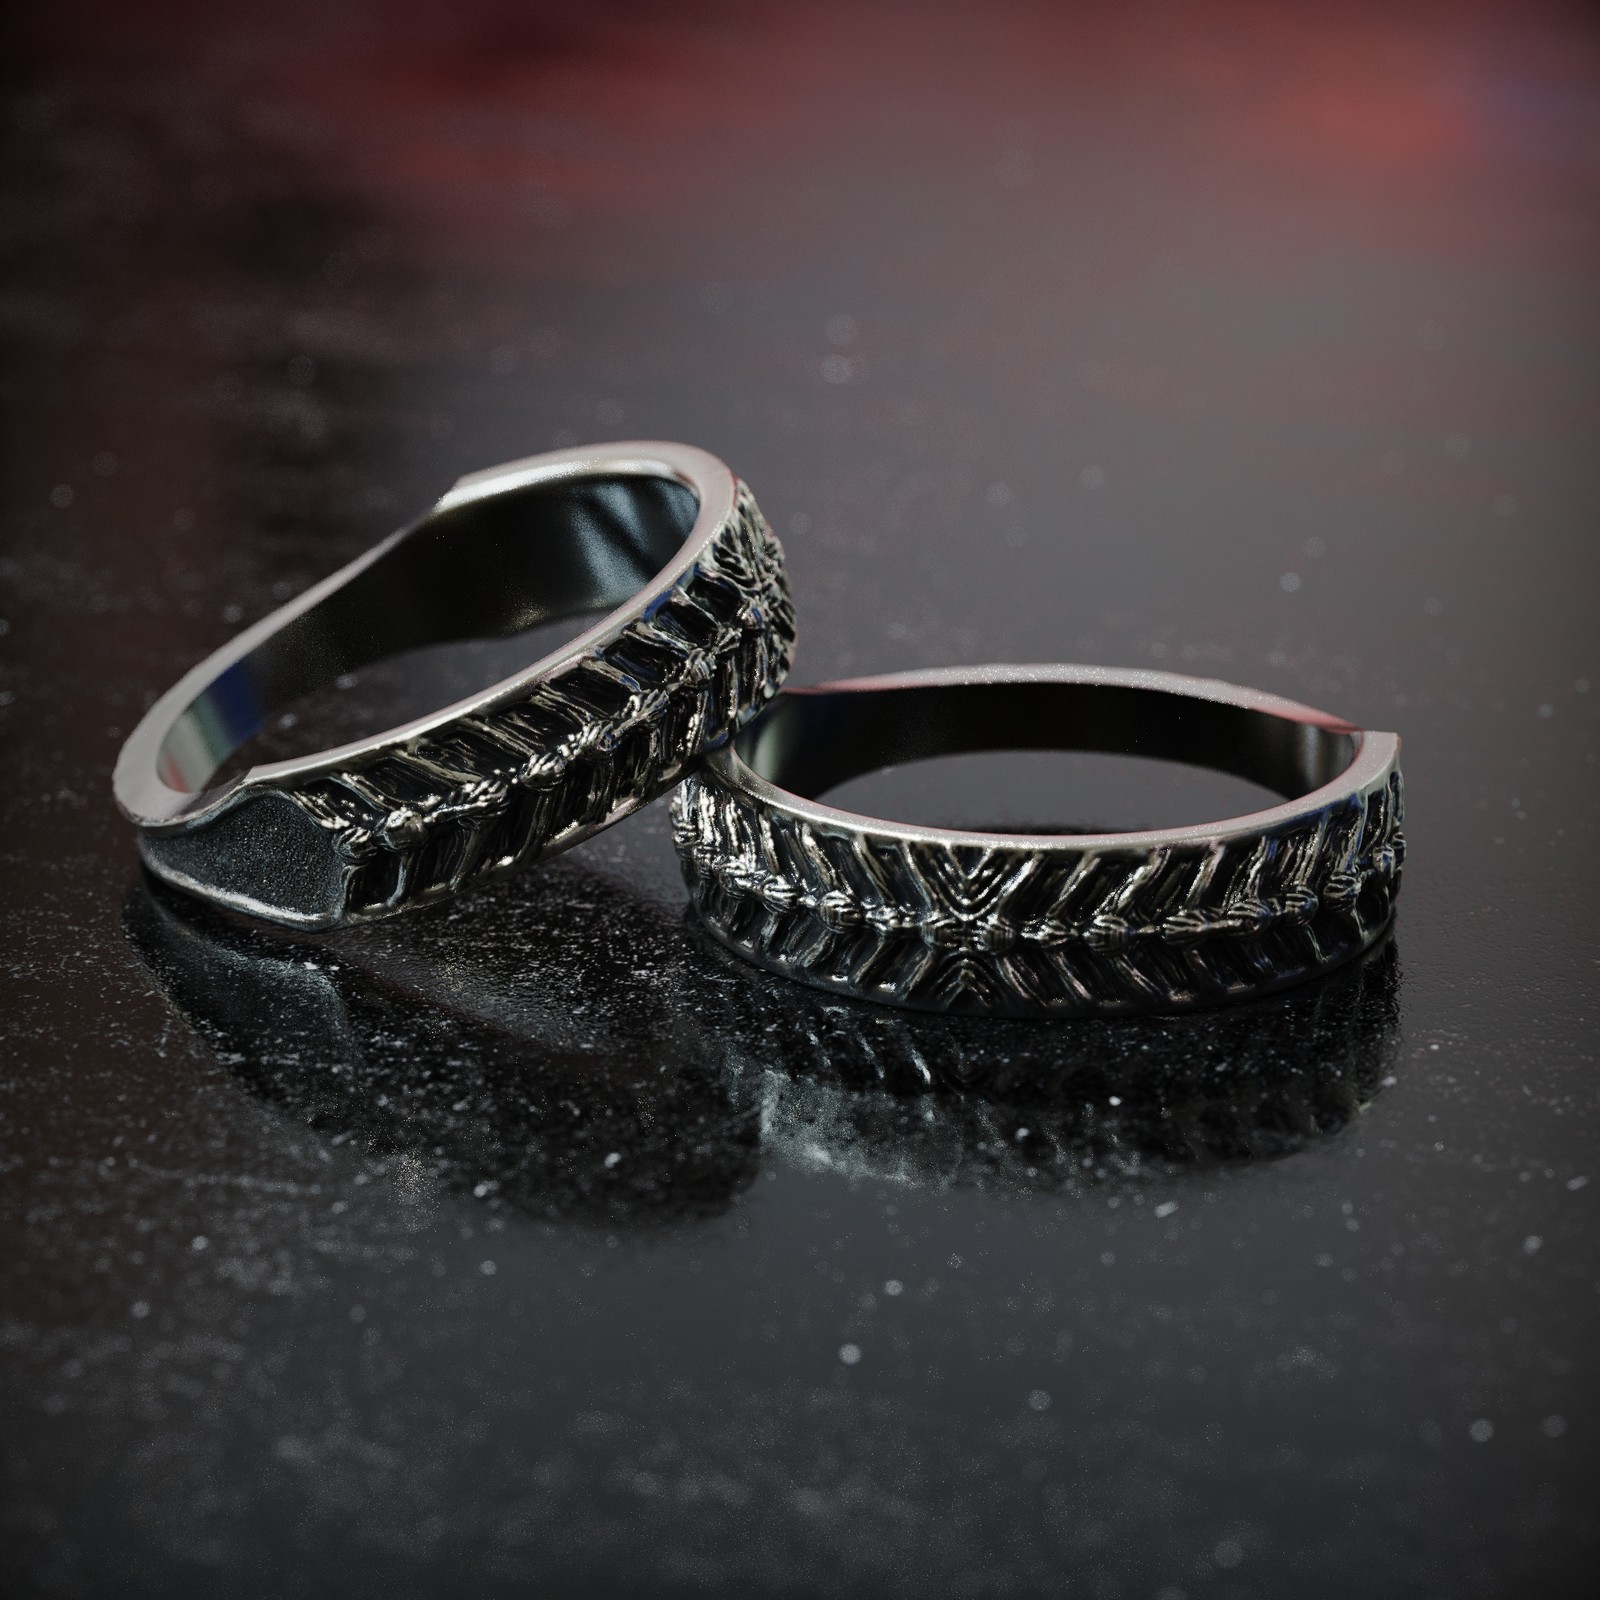 Andrea Crazer - Ring design